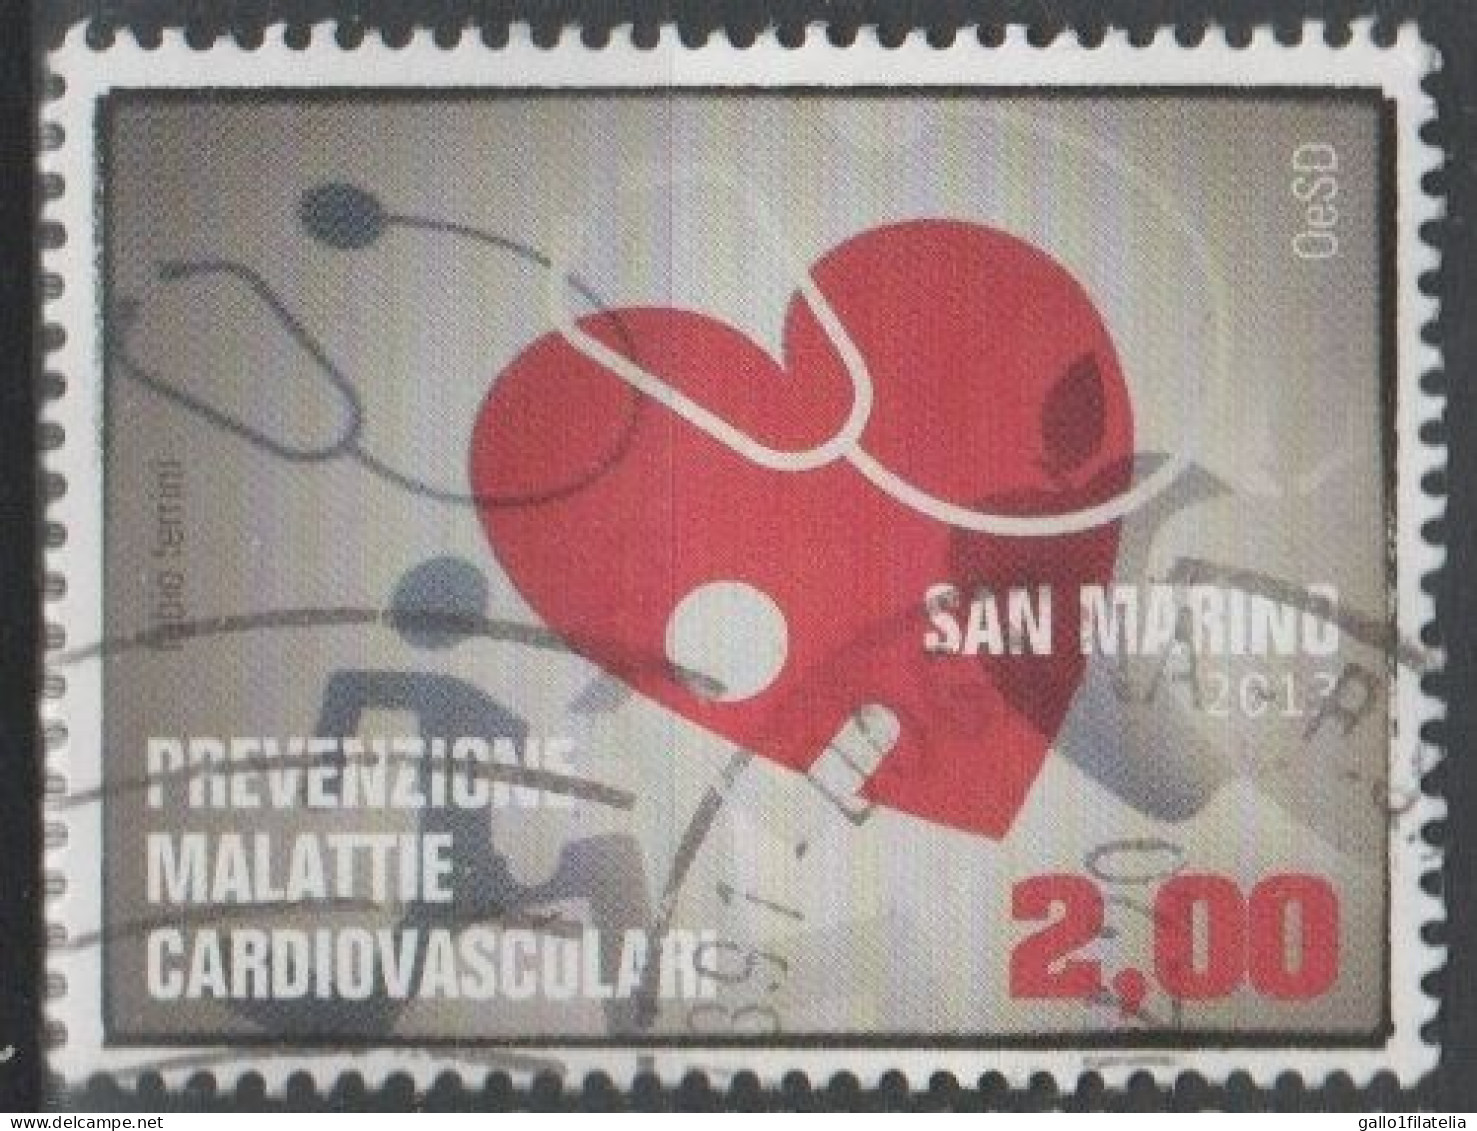 2013 - SAN MARINO - PREVENZIONE MALATTIE CARDIOVASCOLARI / PREVENTION OF CARDIOVASCULAR DISEASES. USATO - Usados